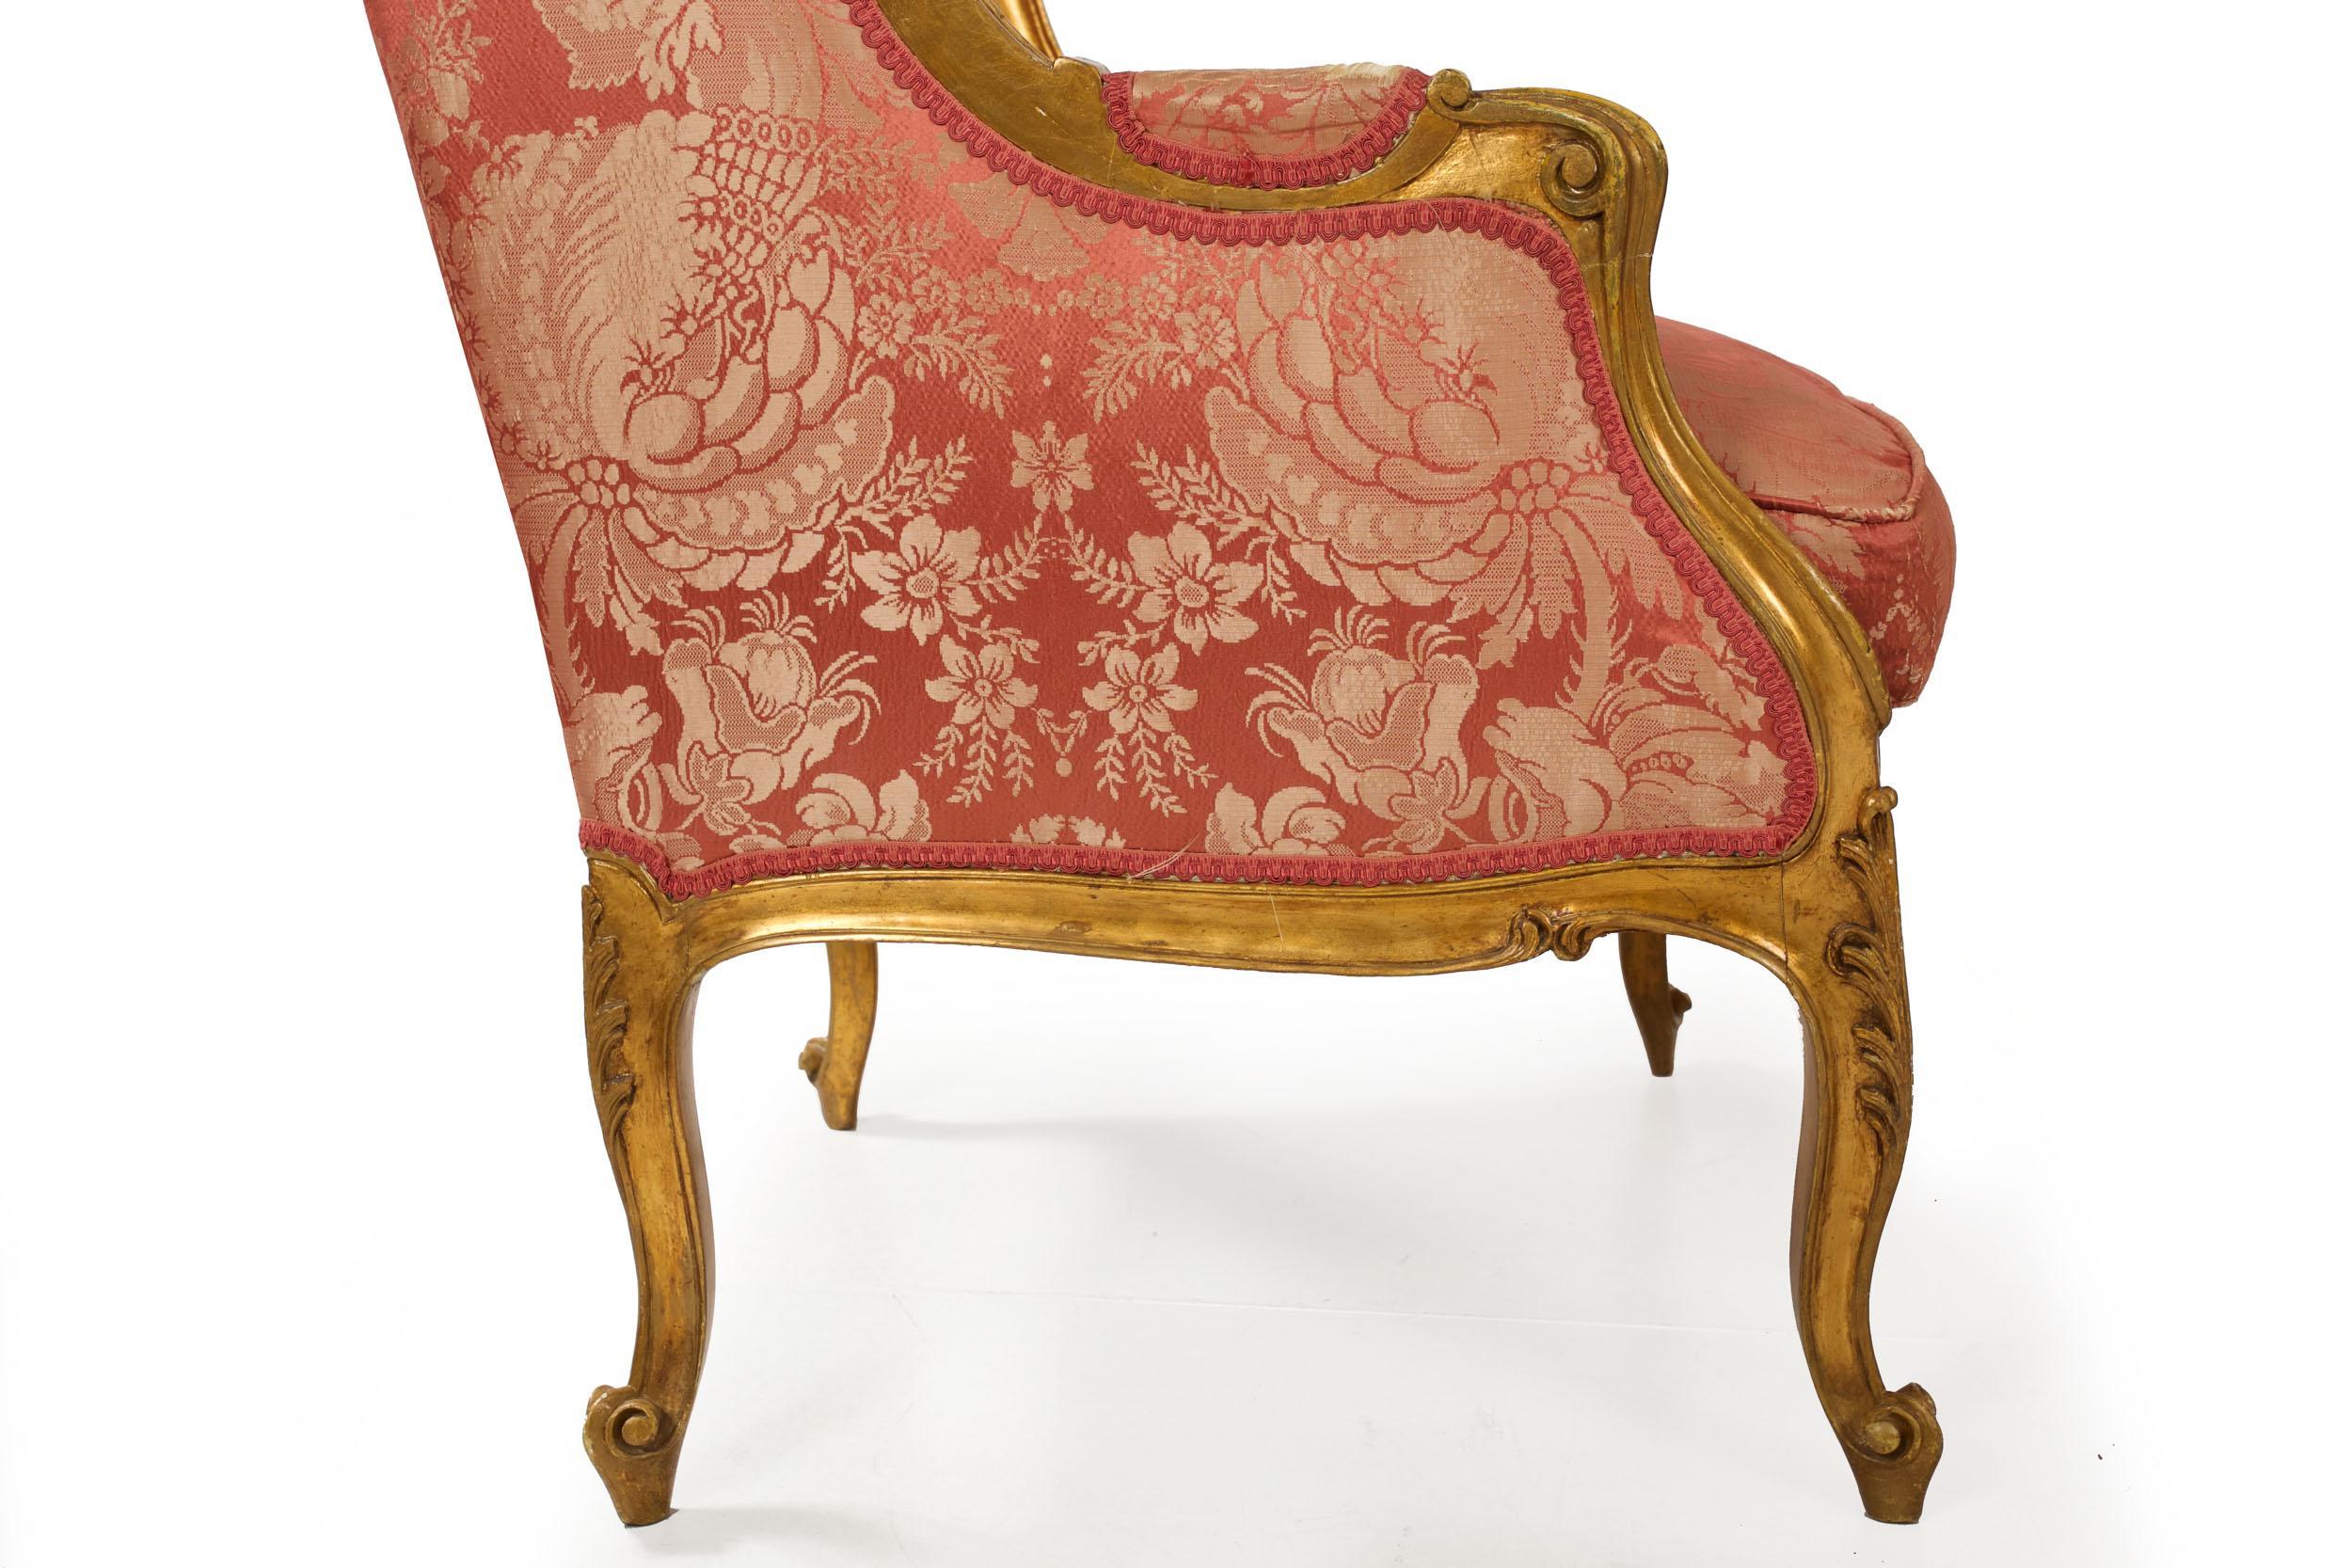 Circa 1880 French Louis XV Style Antique Arm Chairs, a Pair 11